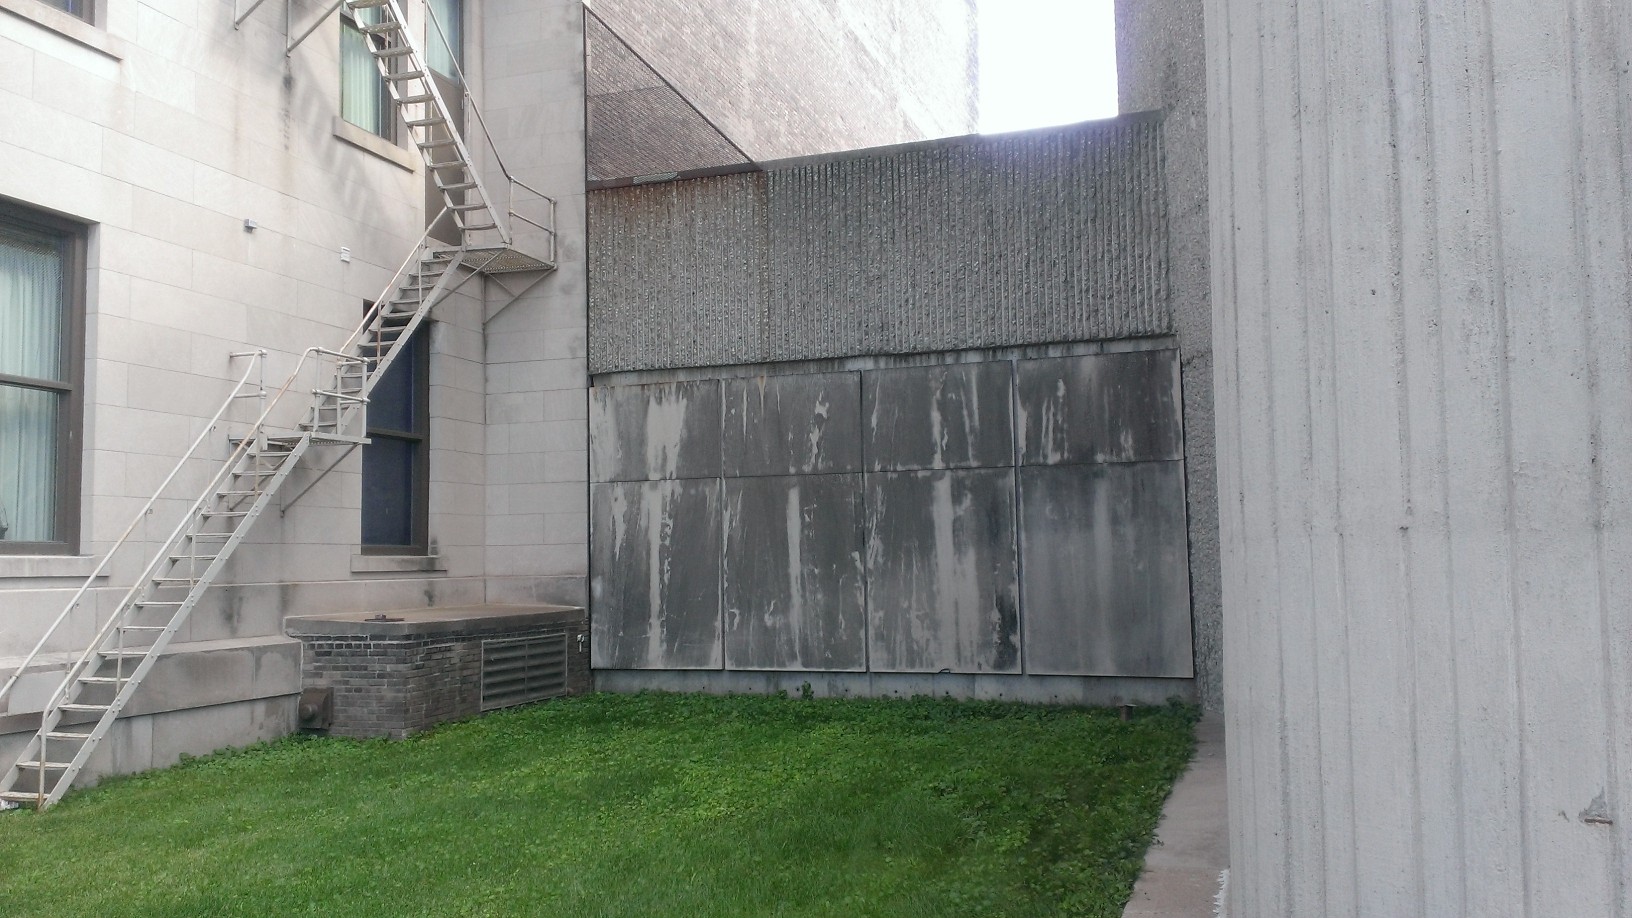 west garage wall before mural Sept 2015.jpg